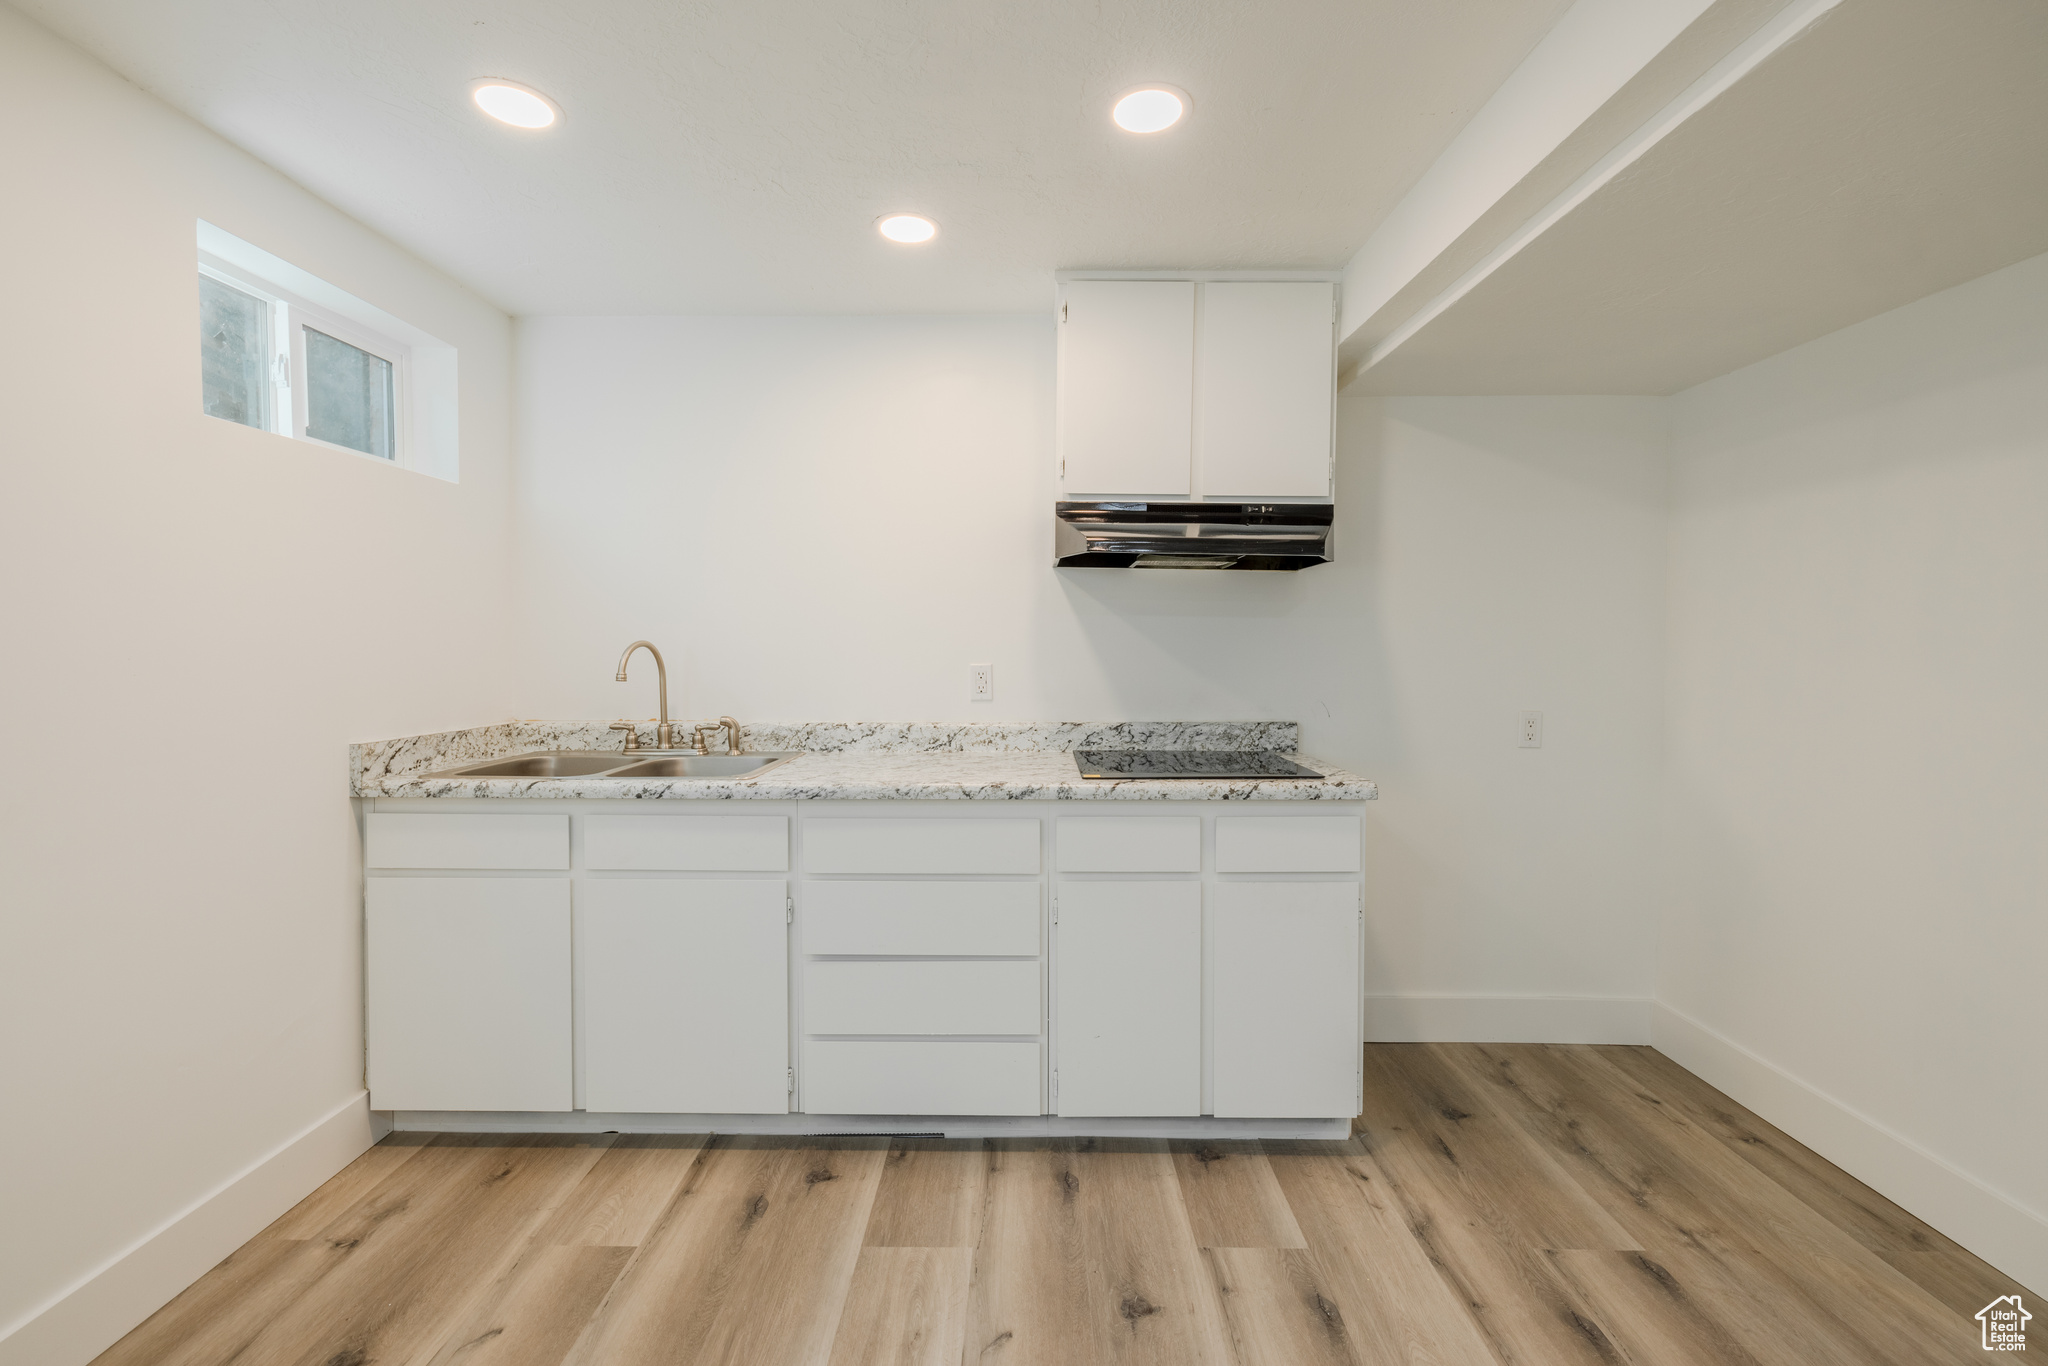 Kitchen featuring light stone countertops, range hood, light hardwood / wood-style floors, sink, and white cabinets